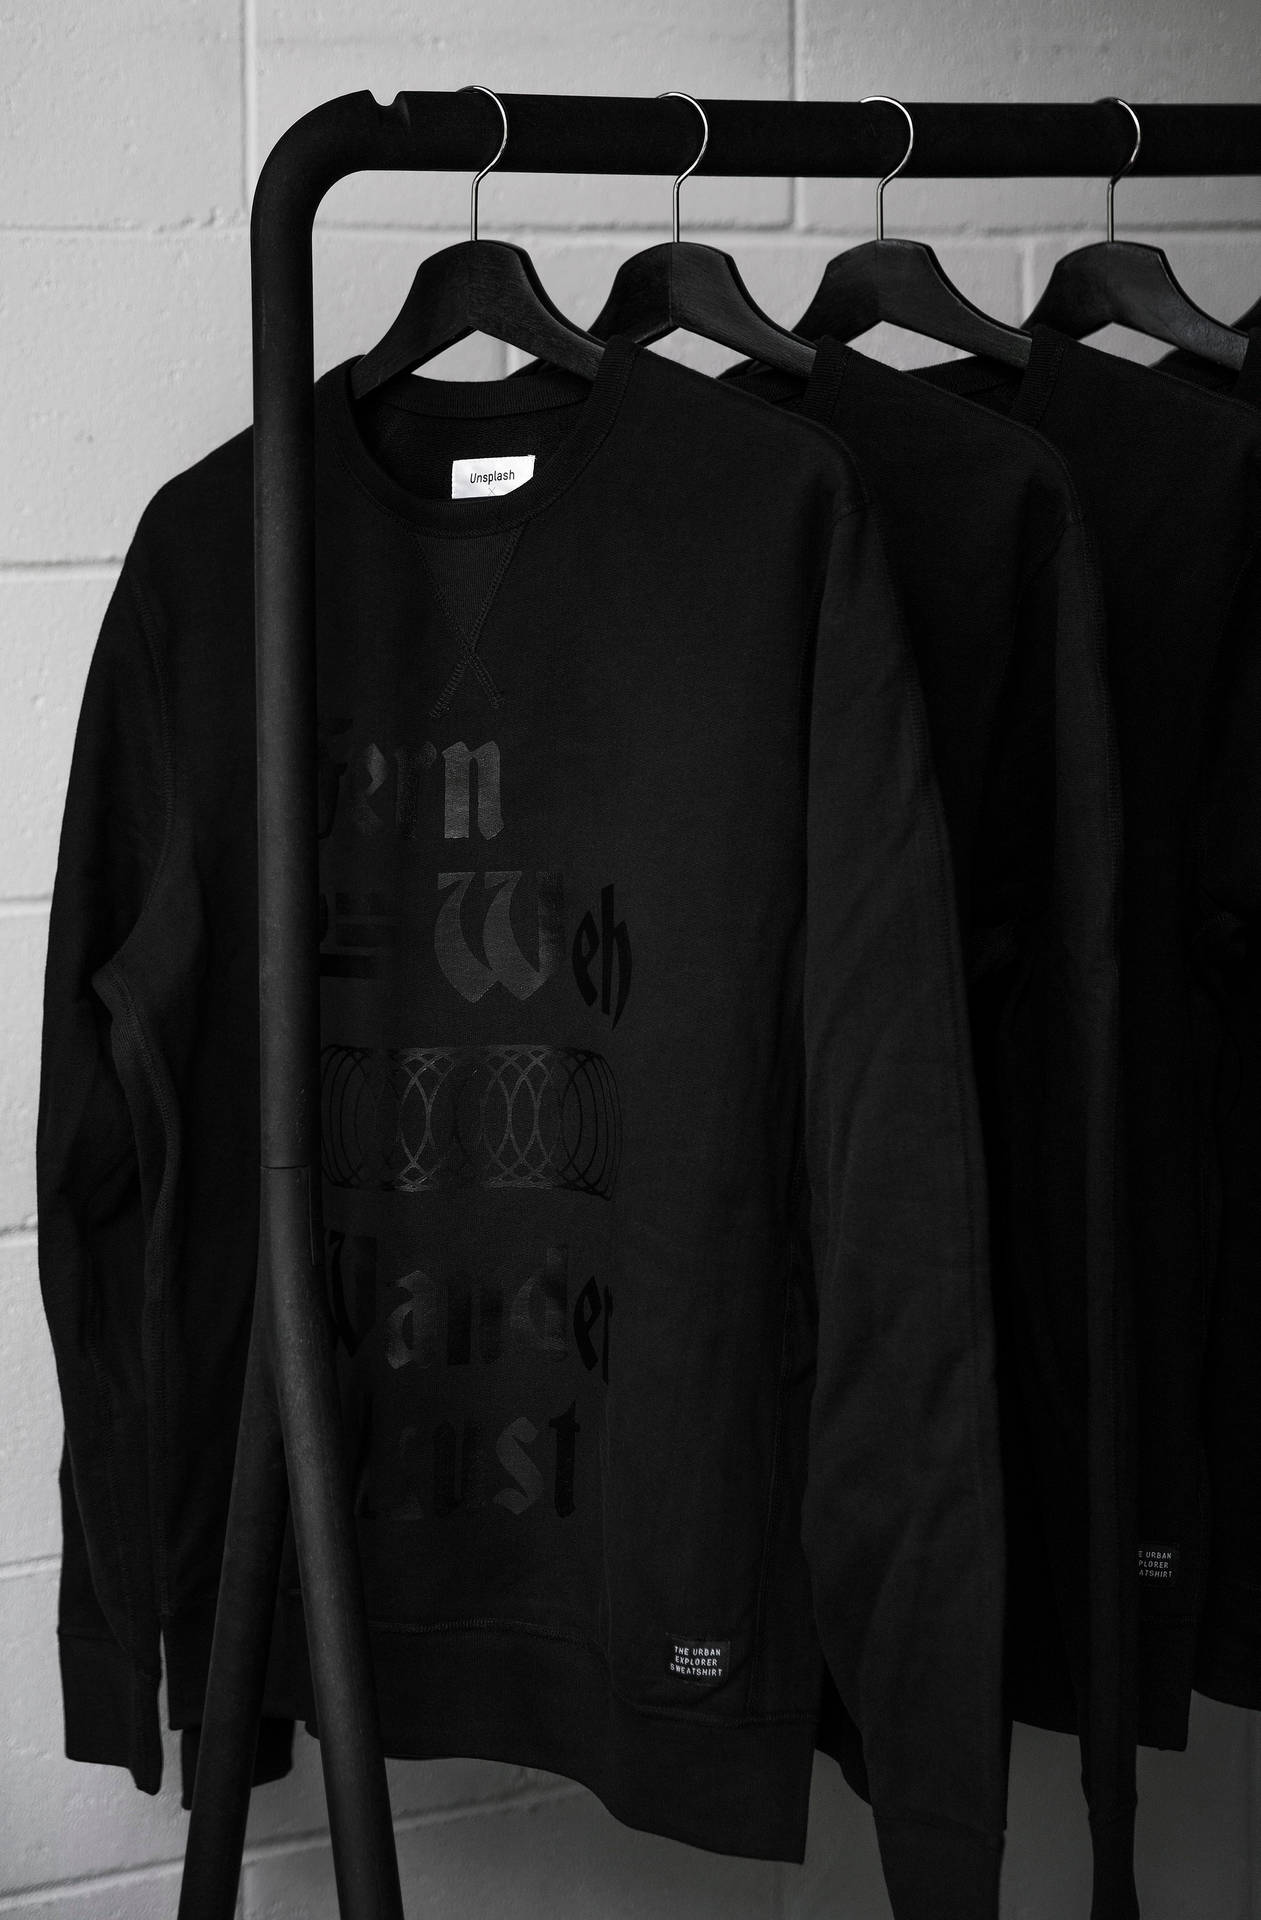 Minimalist Clothes Rack With Sweatshirts Background